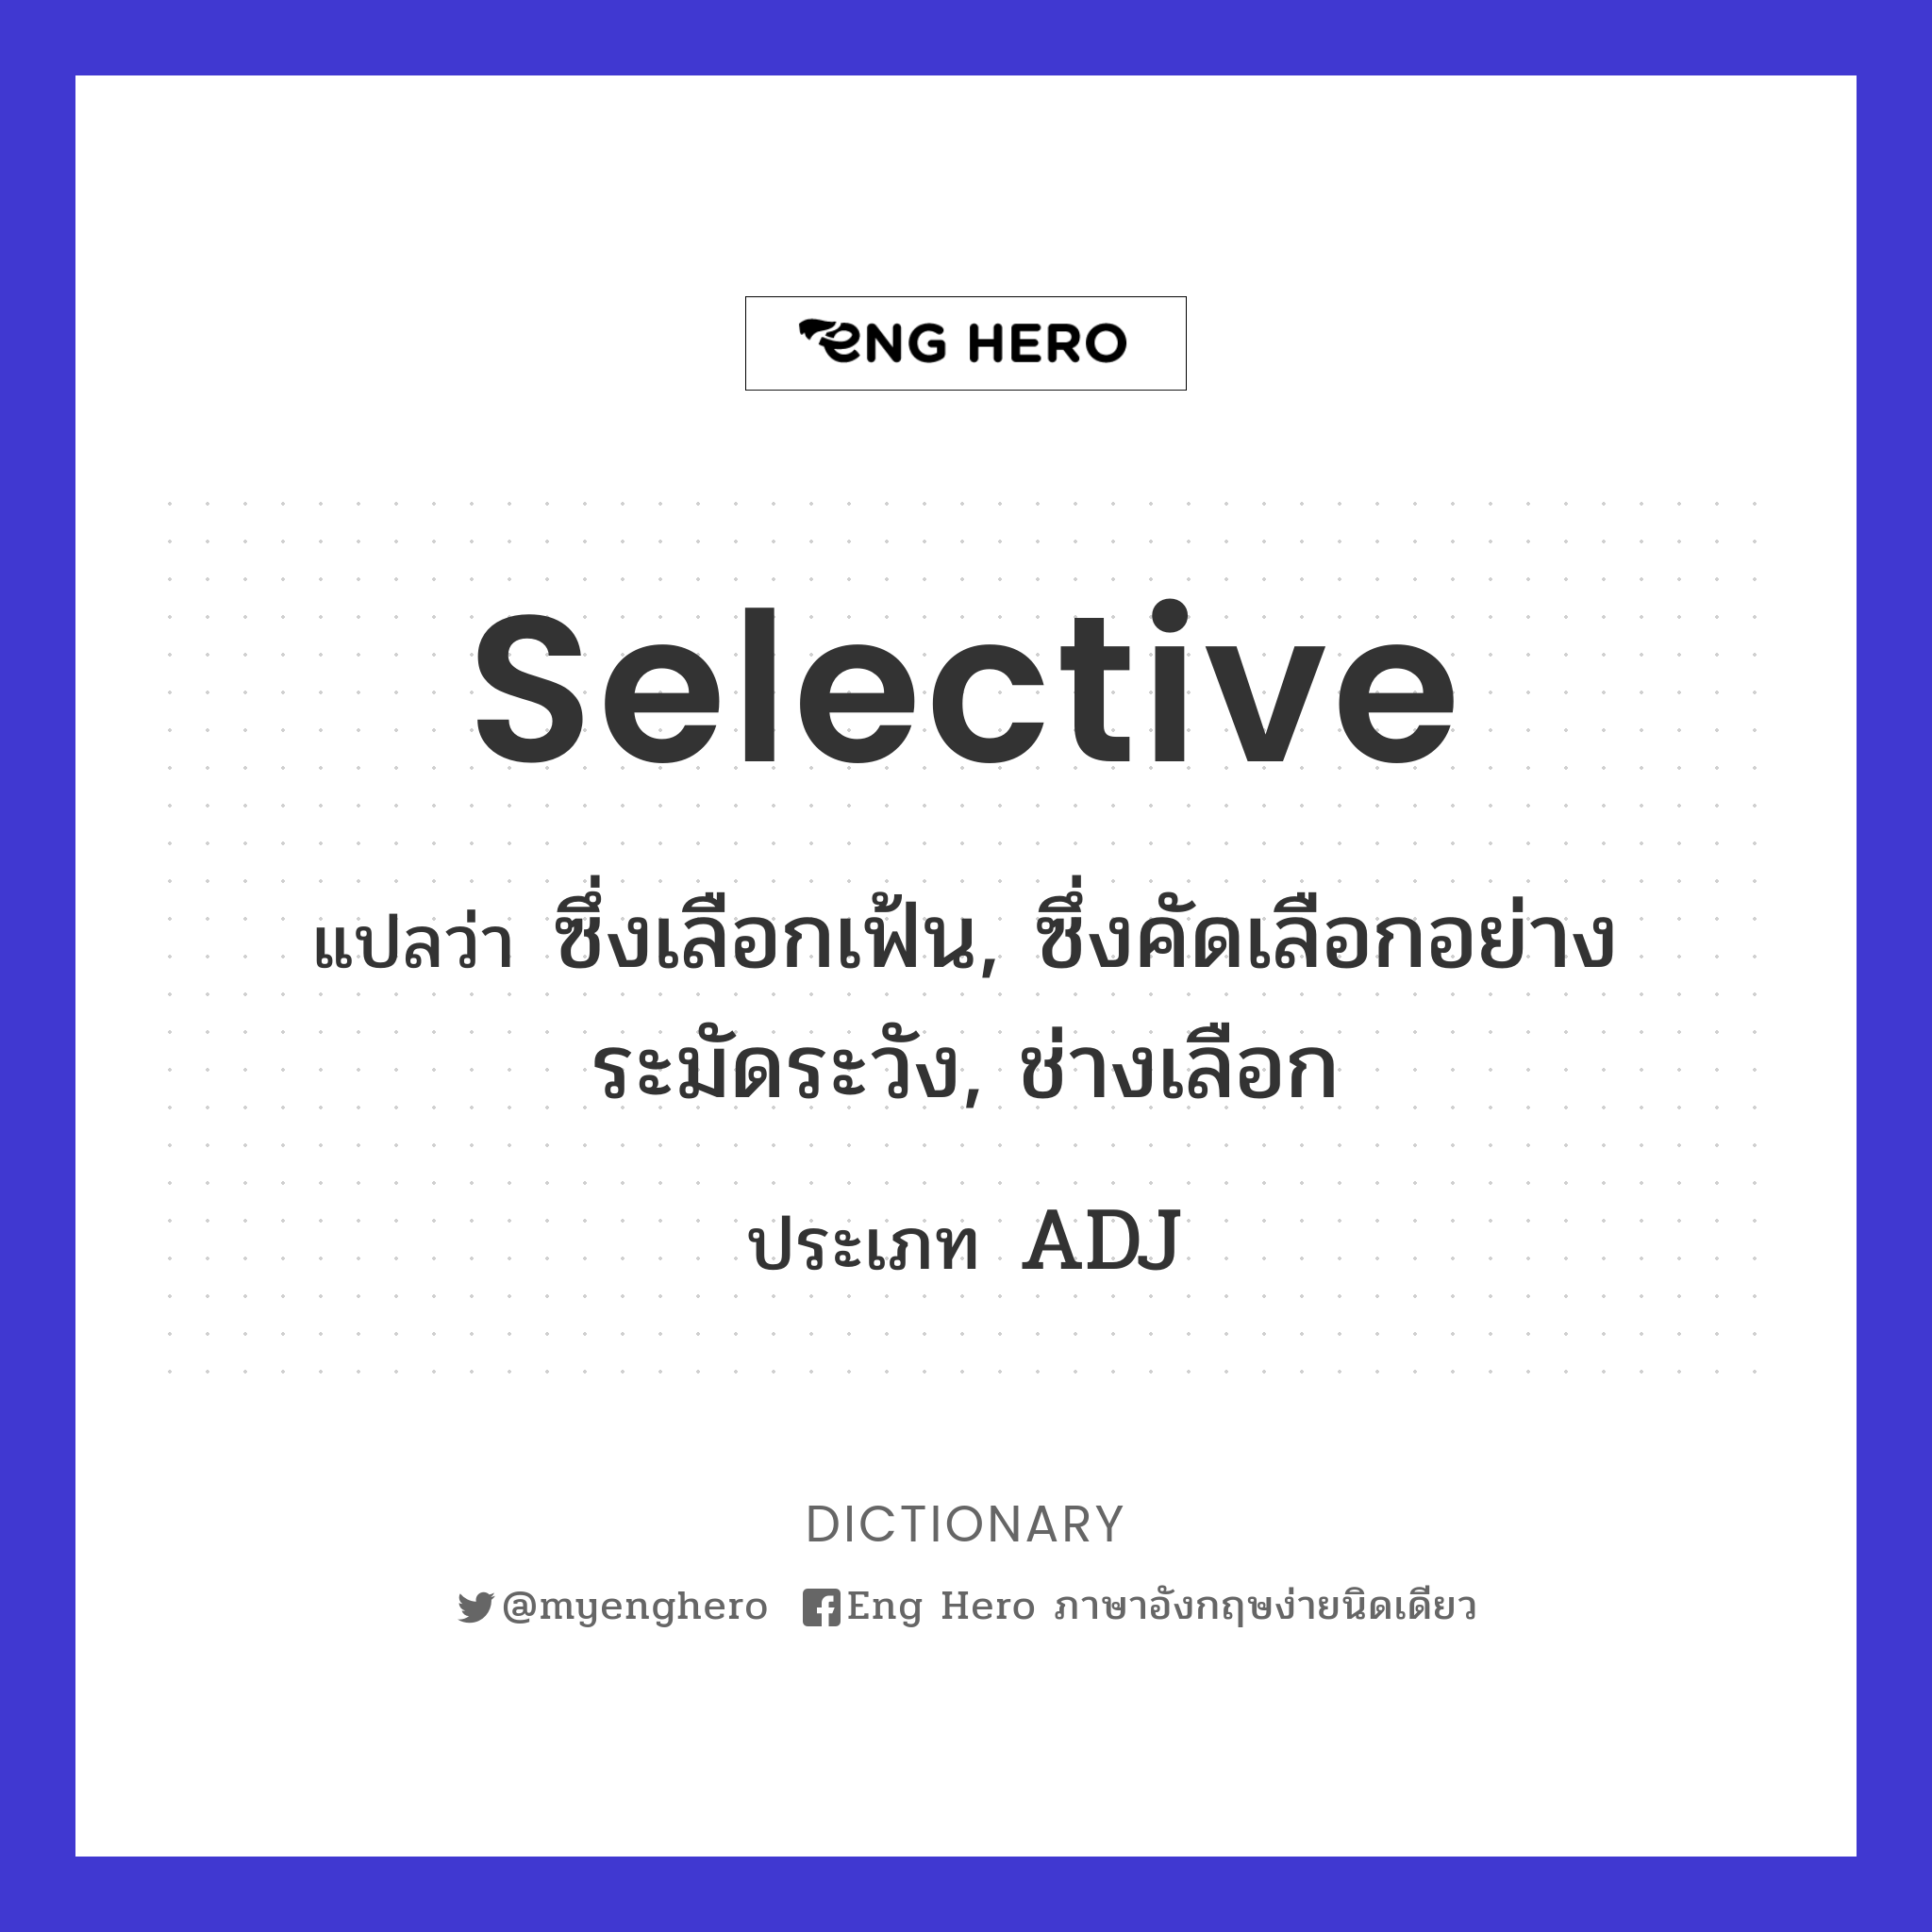 selective